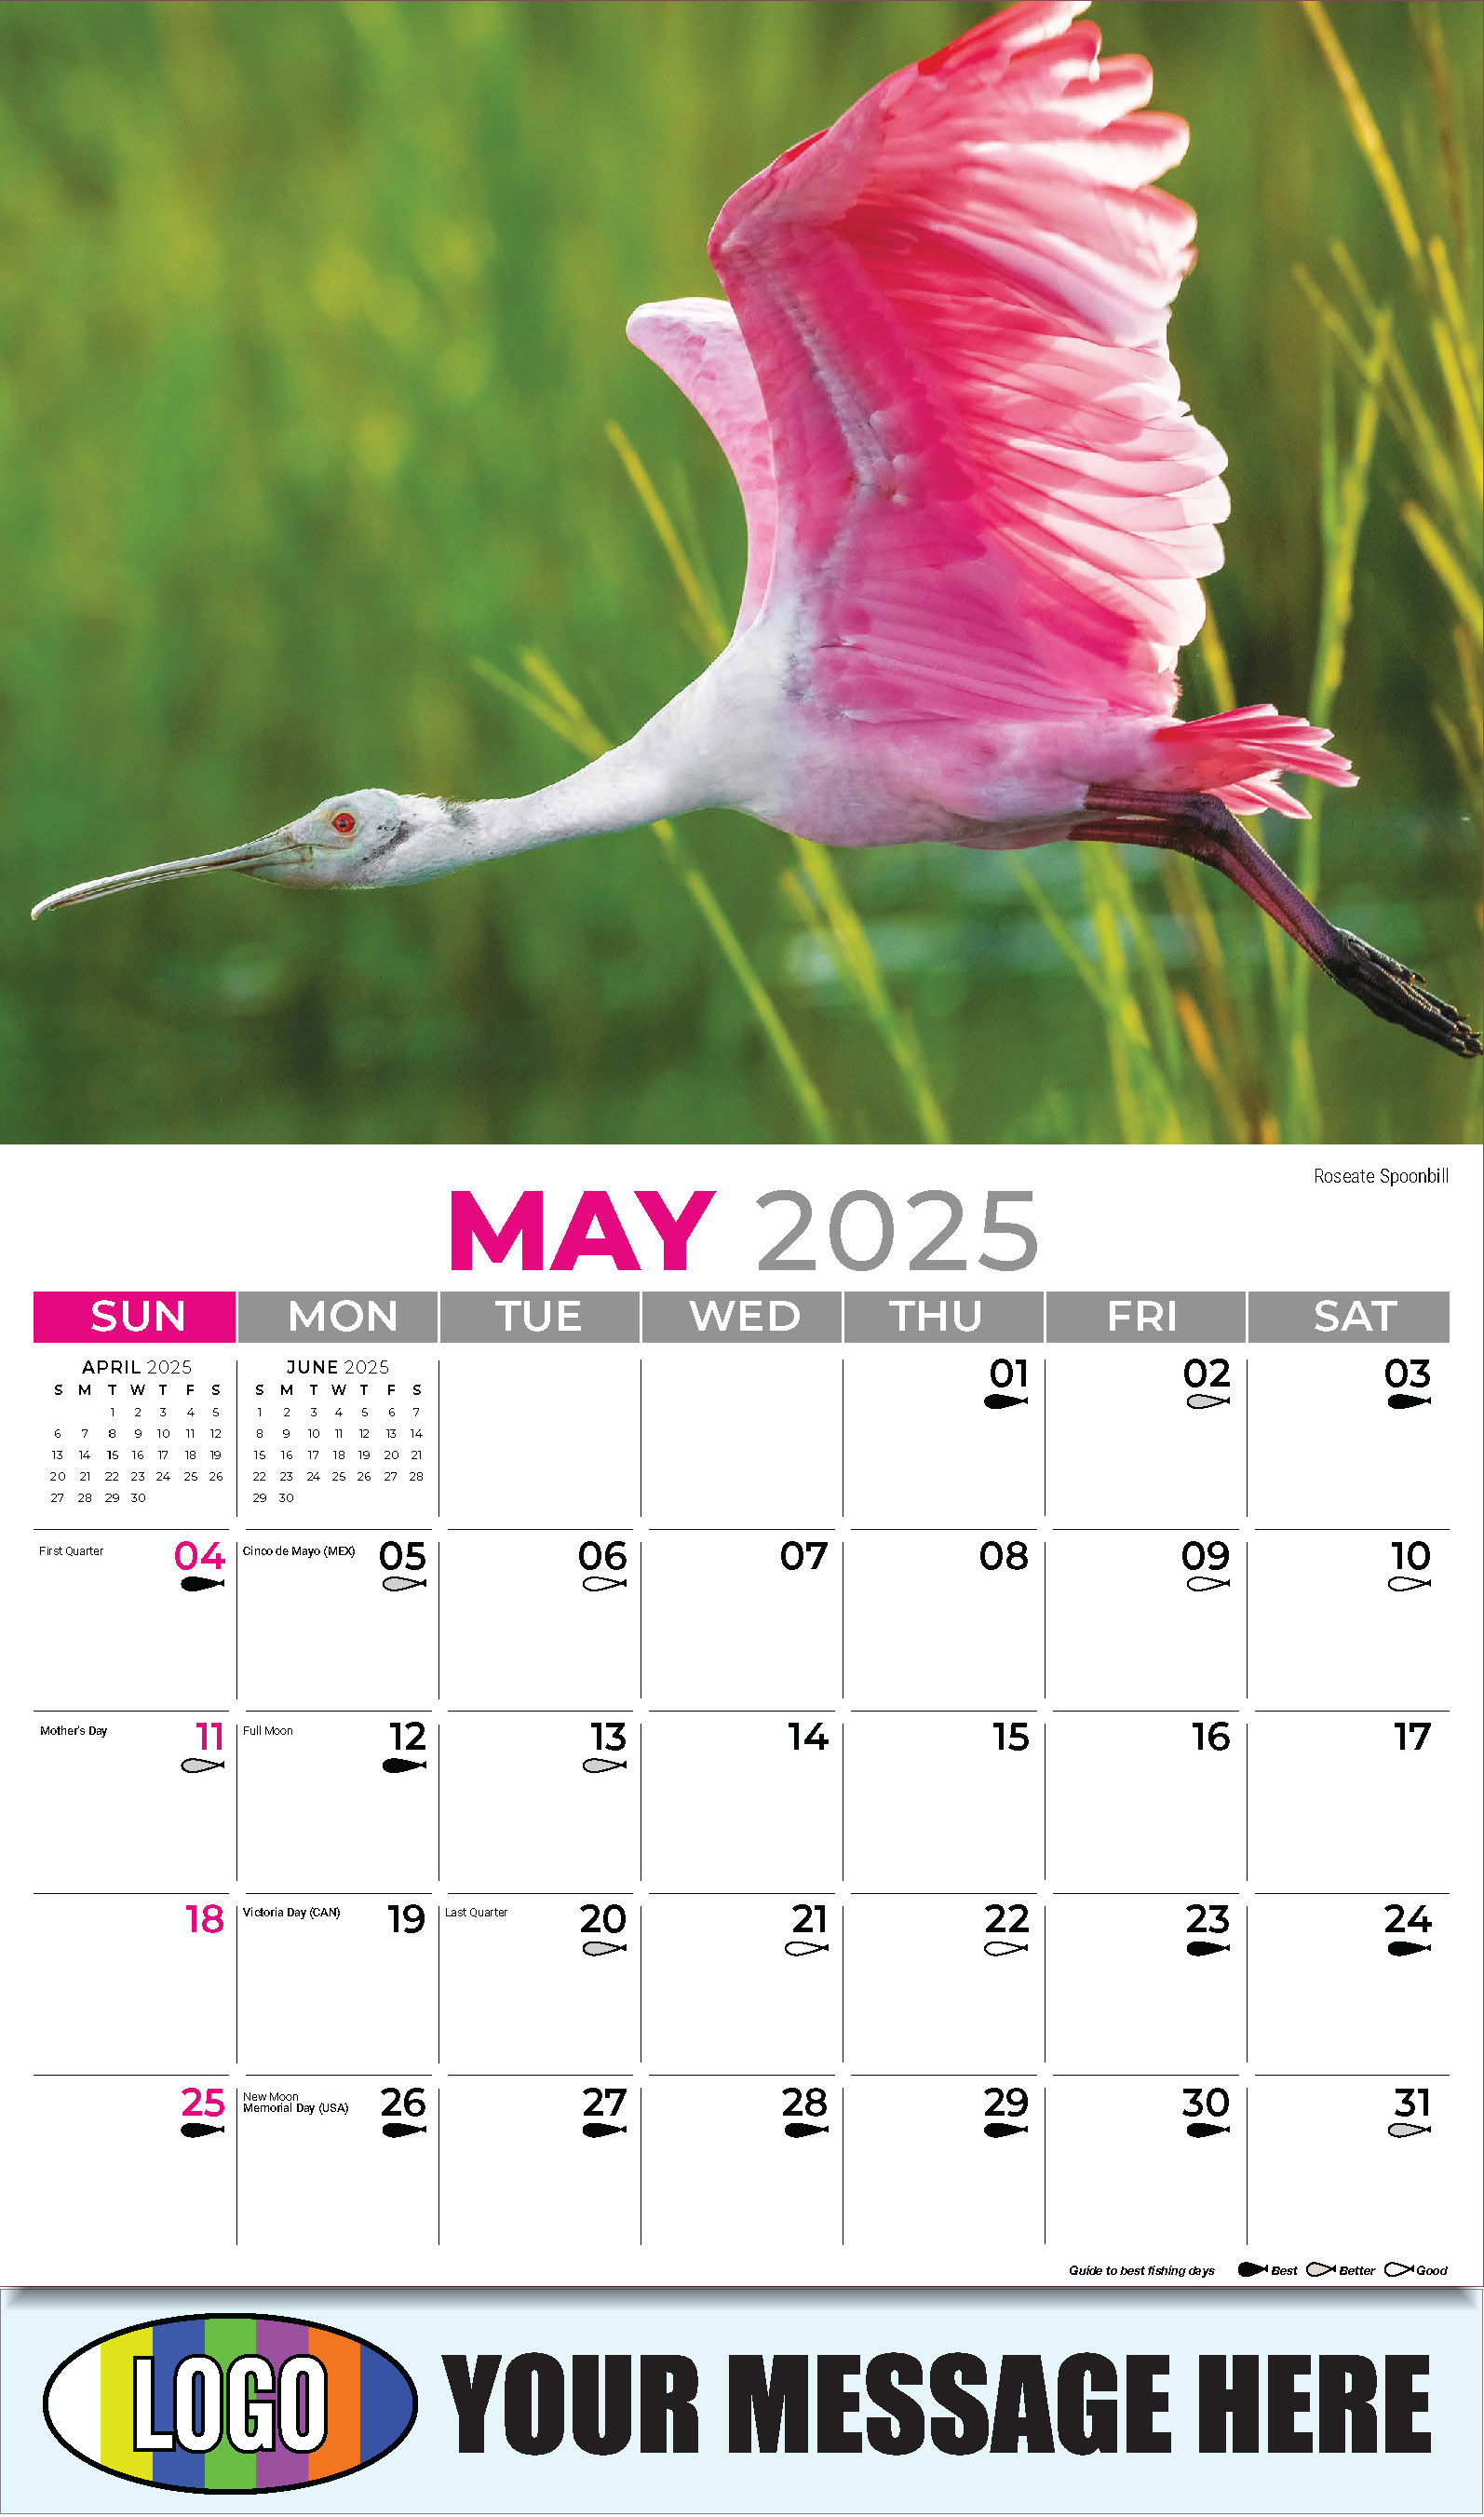 North American Wildlife 2025 Business Promo Wall Calendar - May